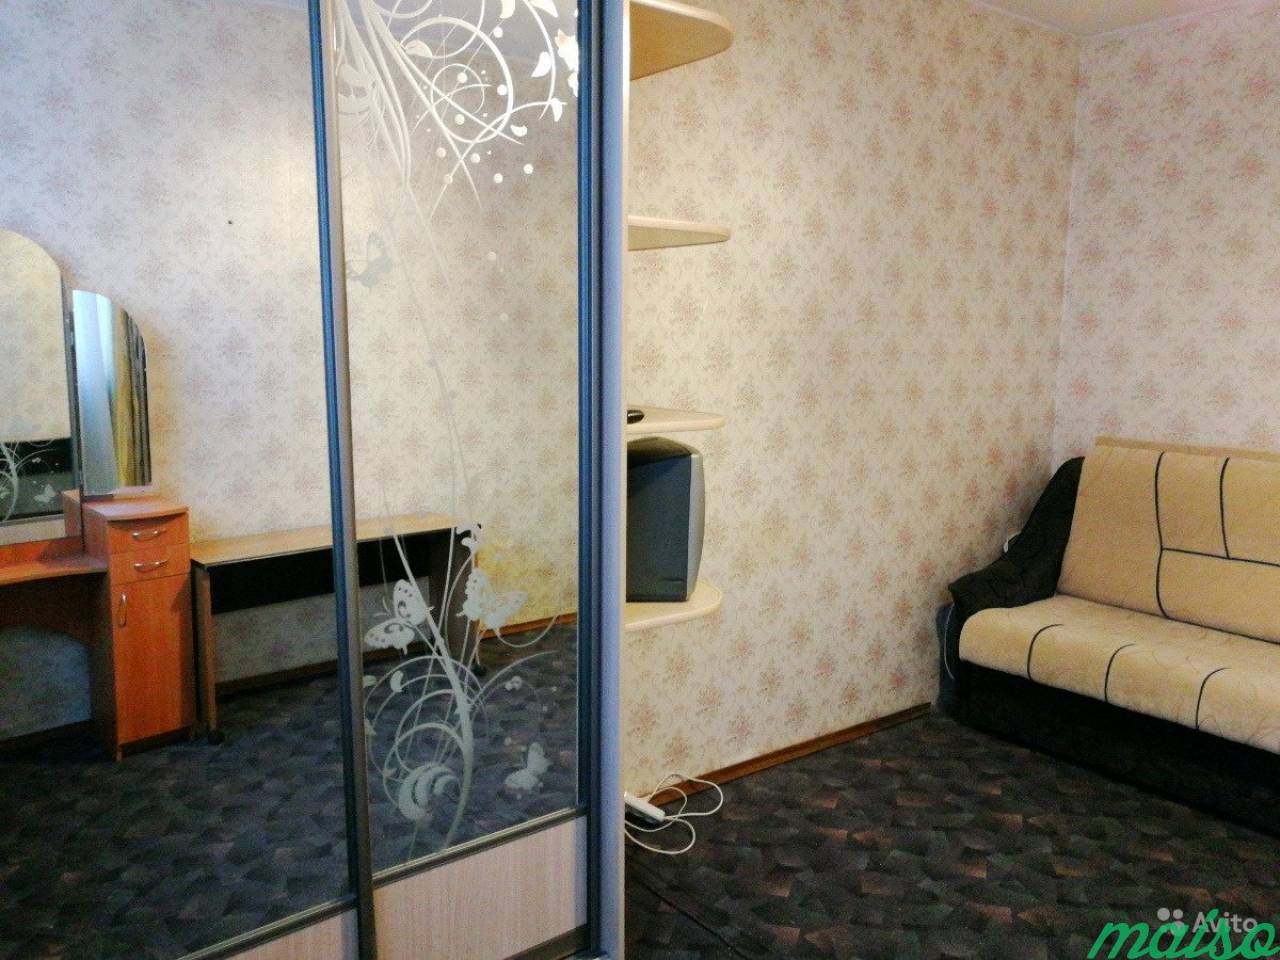 Комната 12 м² в 3-к, 2/8 эт. в Санкт-Петербурге. Фото 1